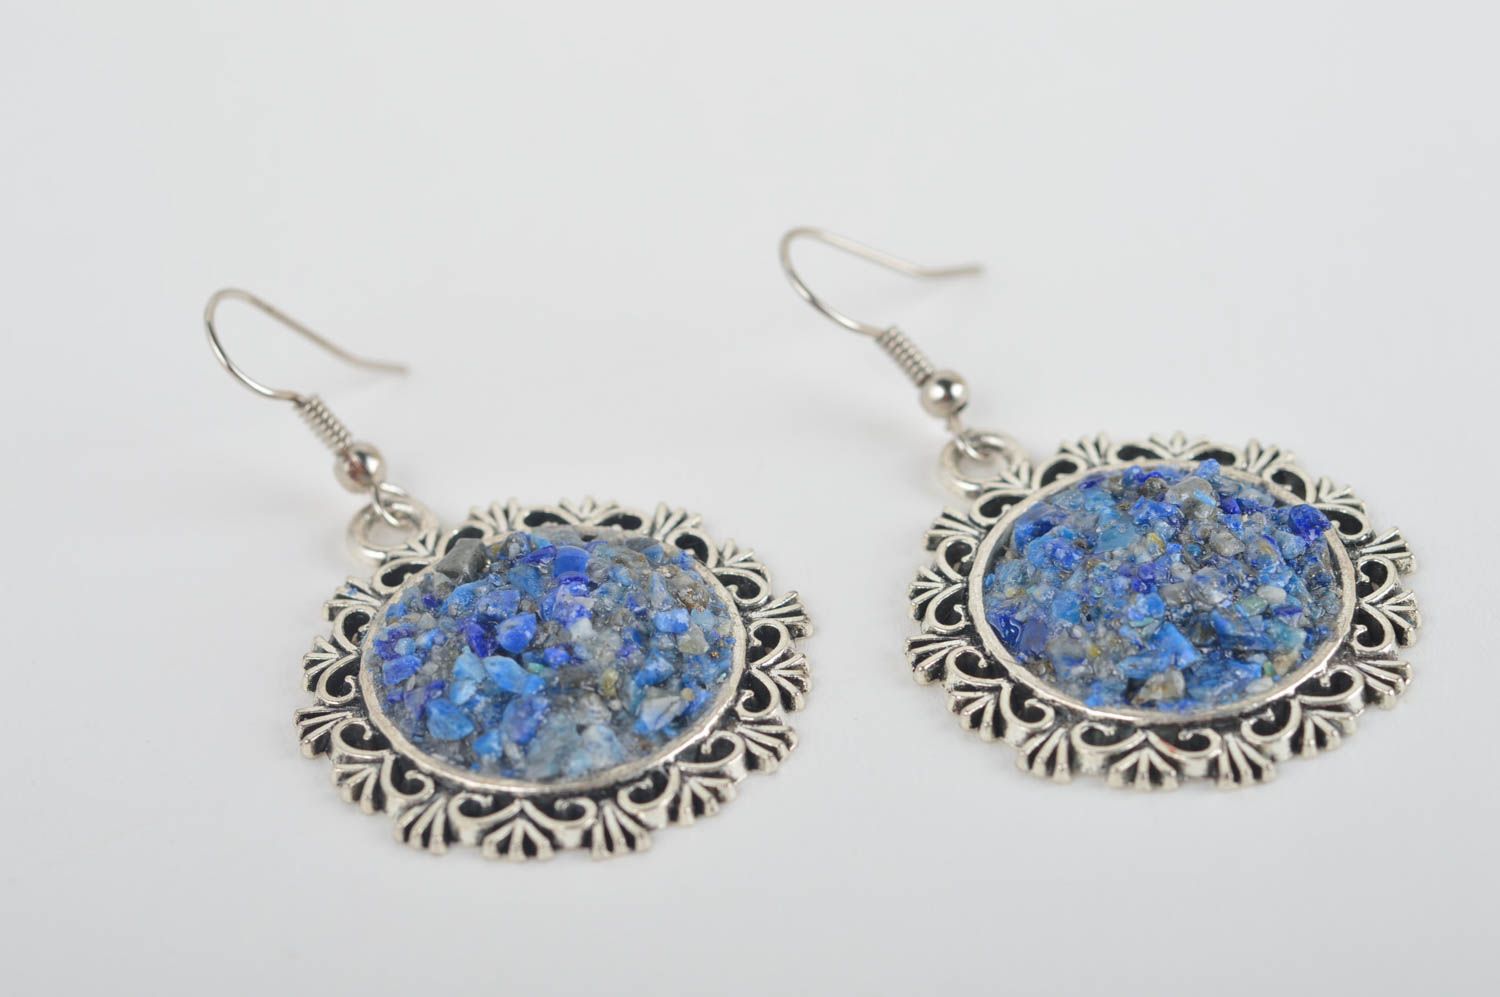 Earrings with charms handmade natural stone earrings elegant jewelry photo 2